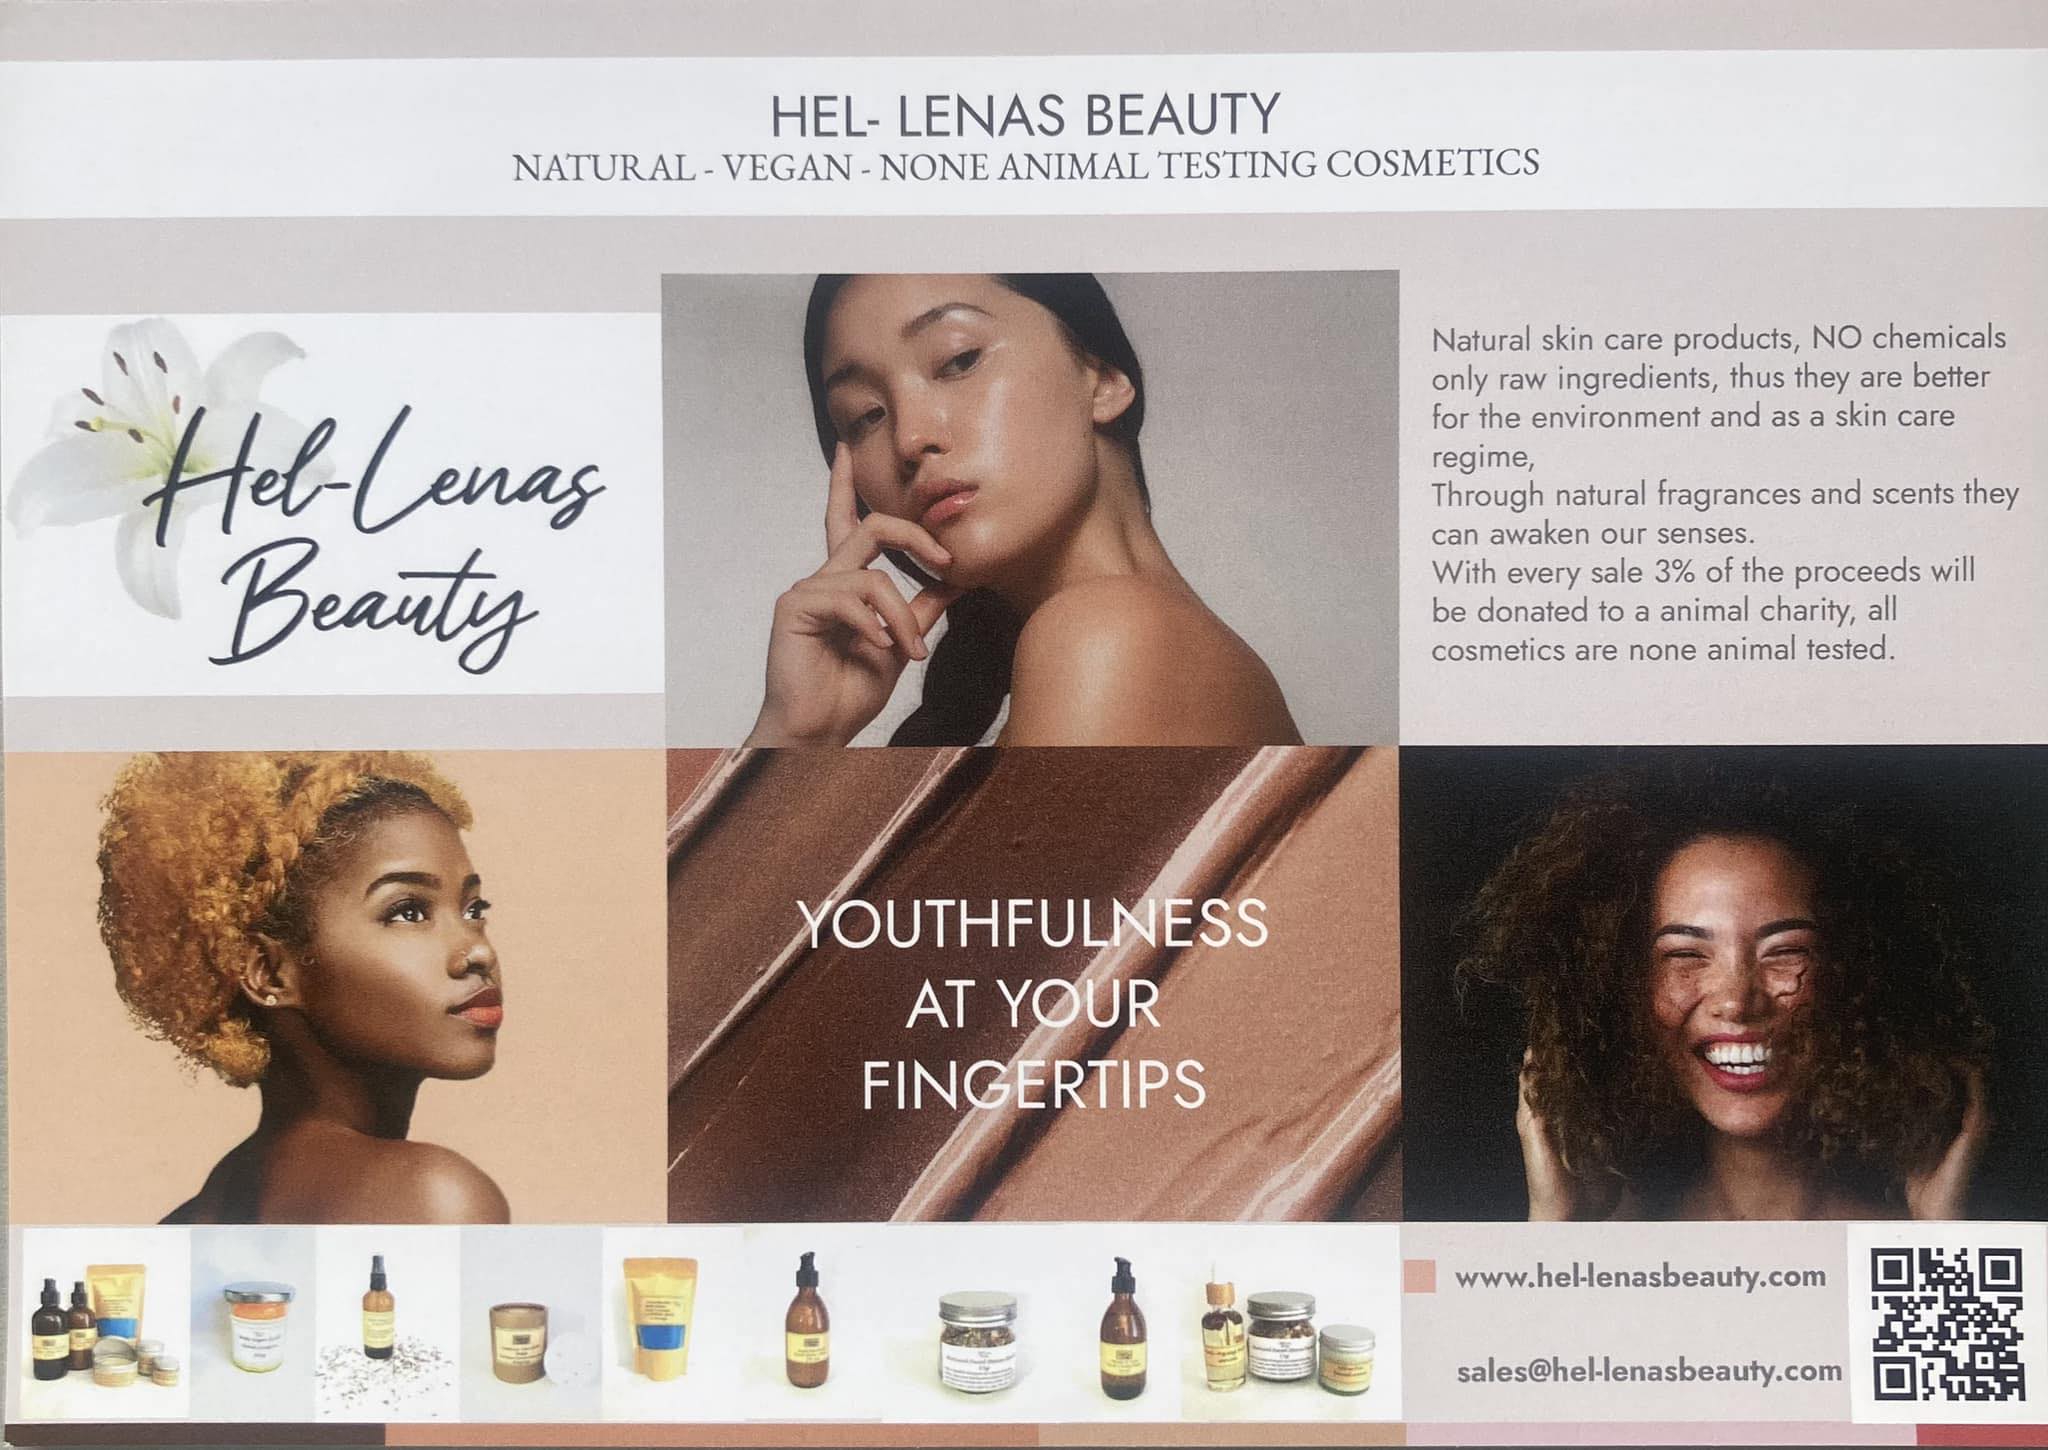 Hel-lenas Beauty - Youthfulness at Your Fingertips